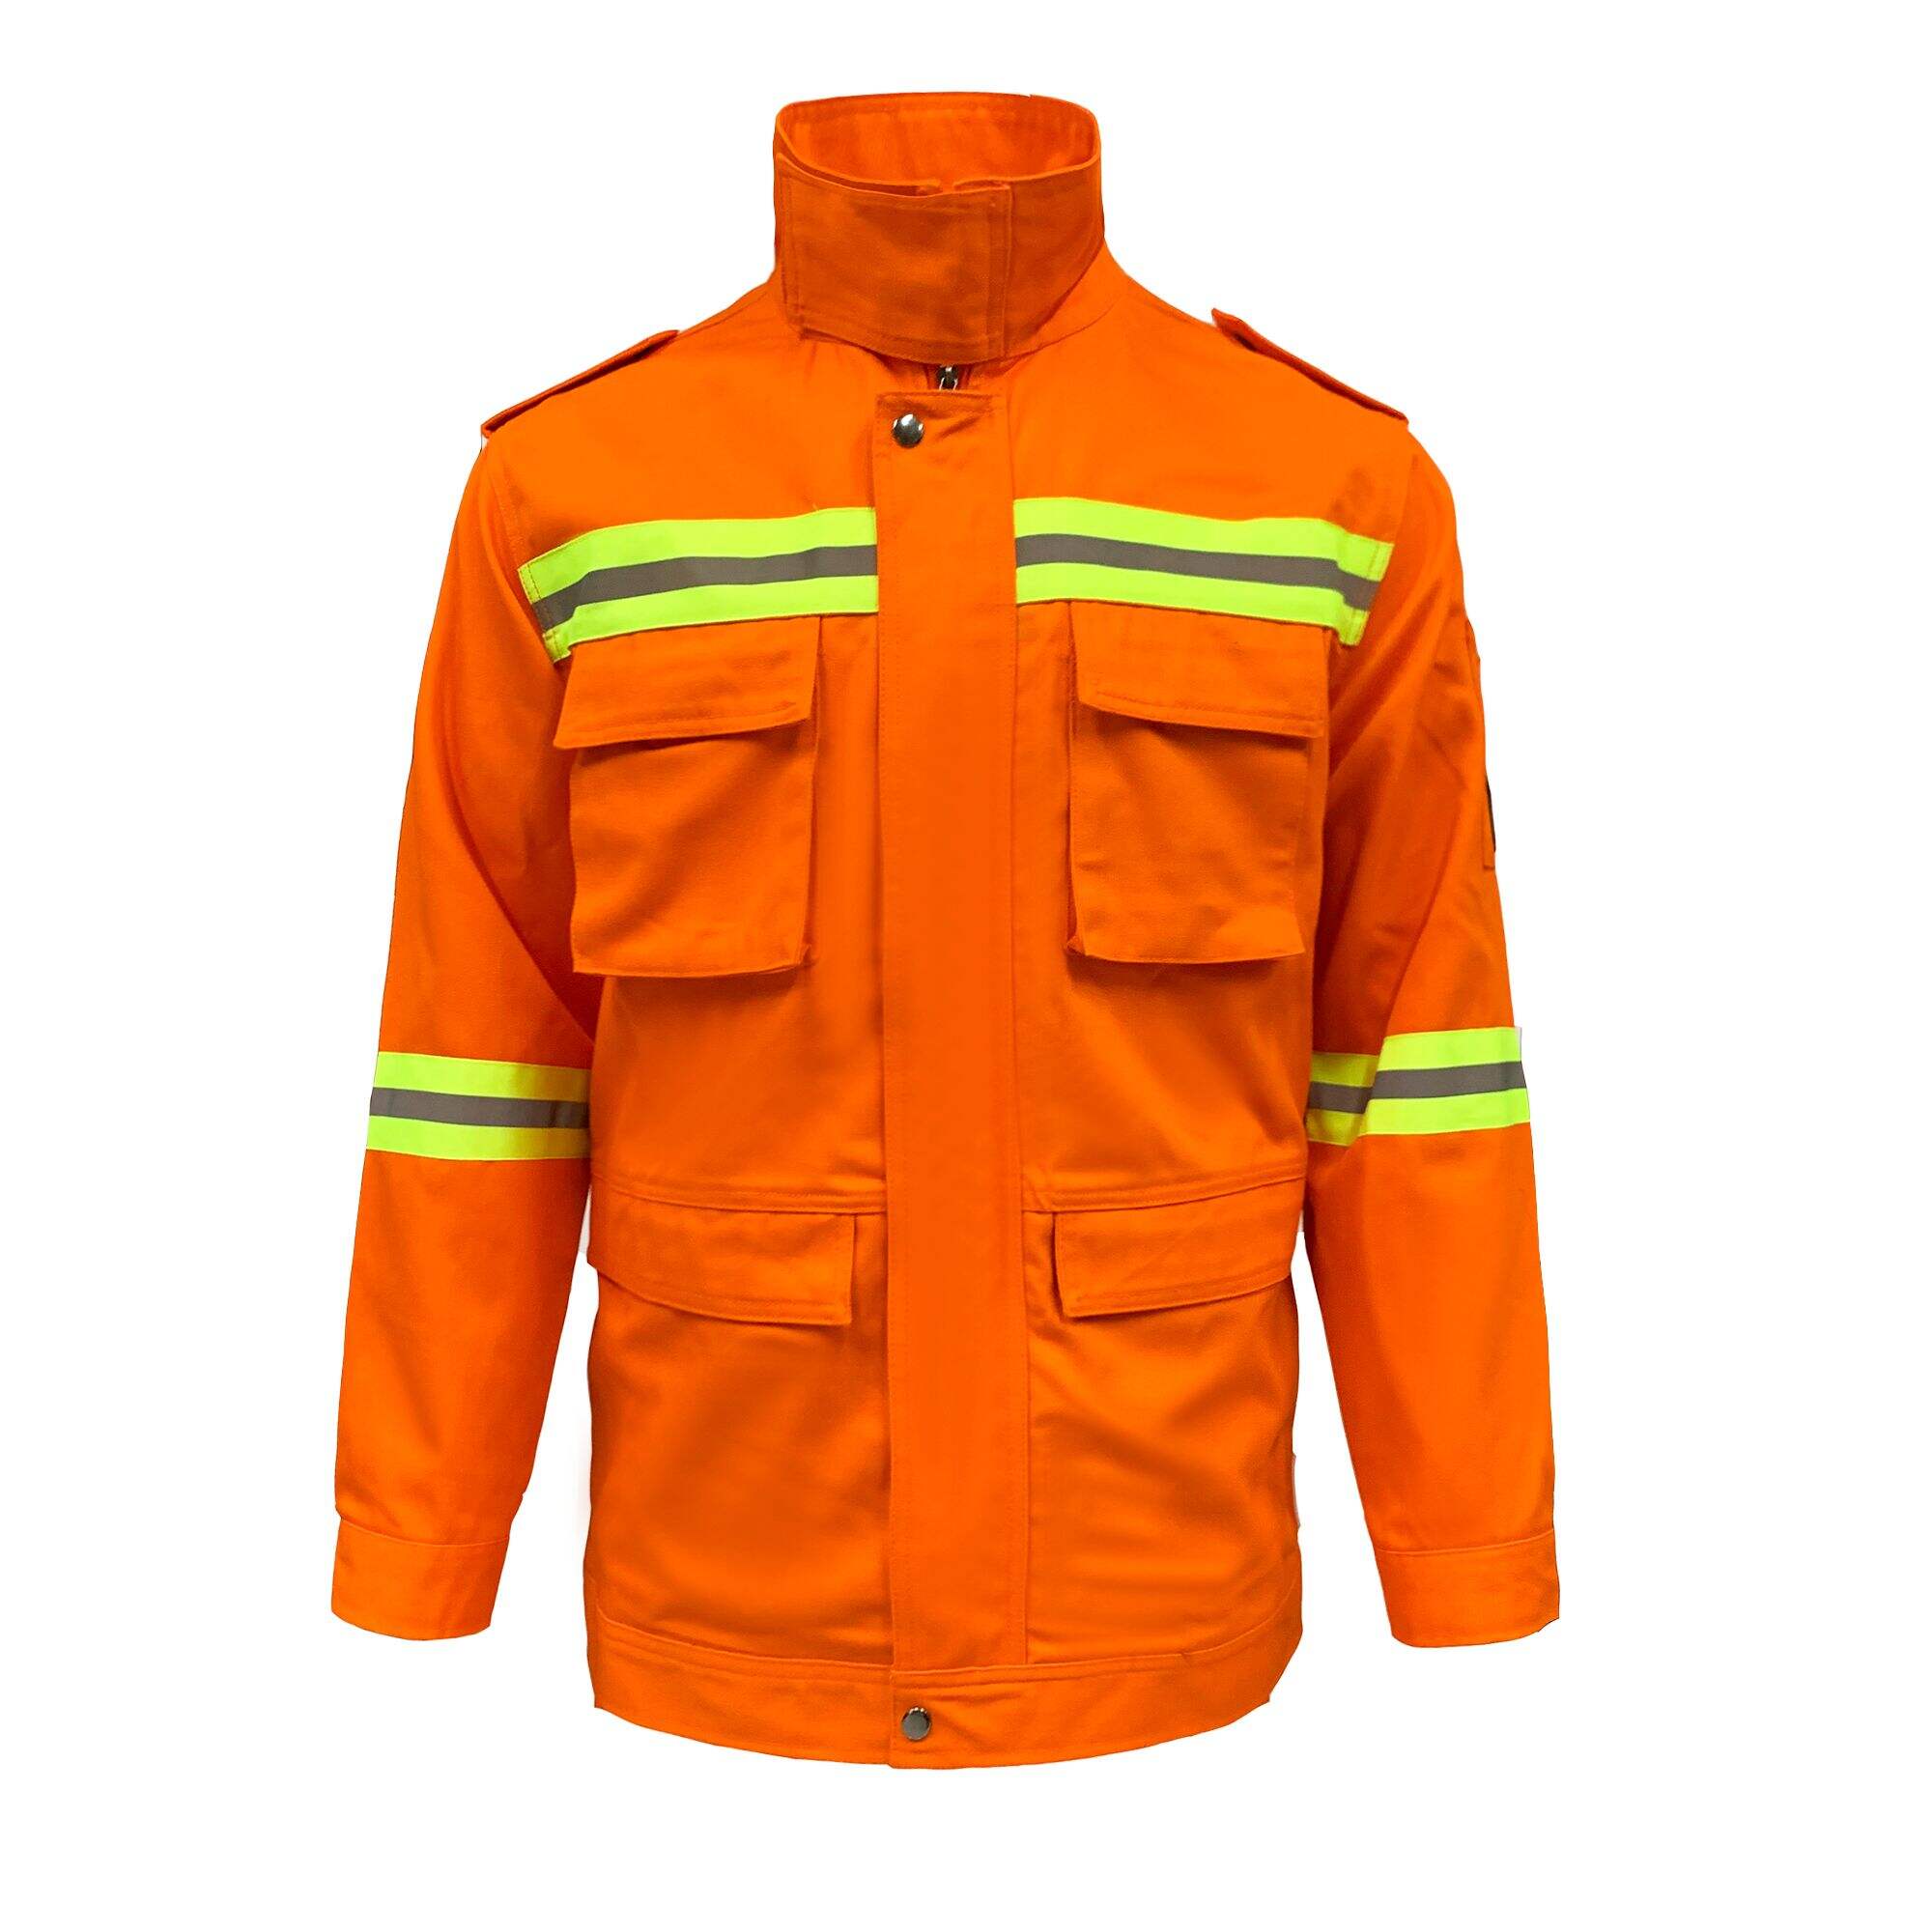 Industrial Tailored Men Premium Workwear Hi Vis Reflective Safety Suit